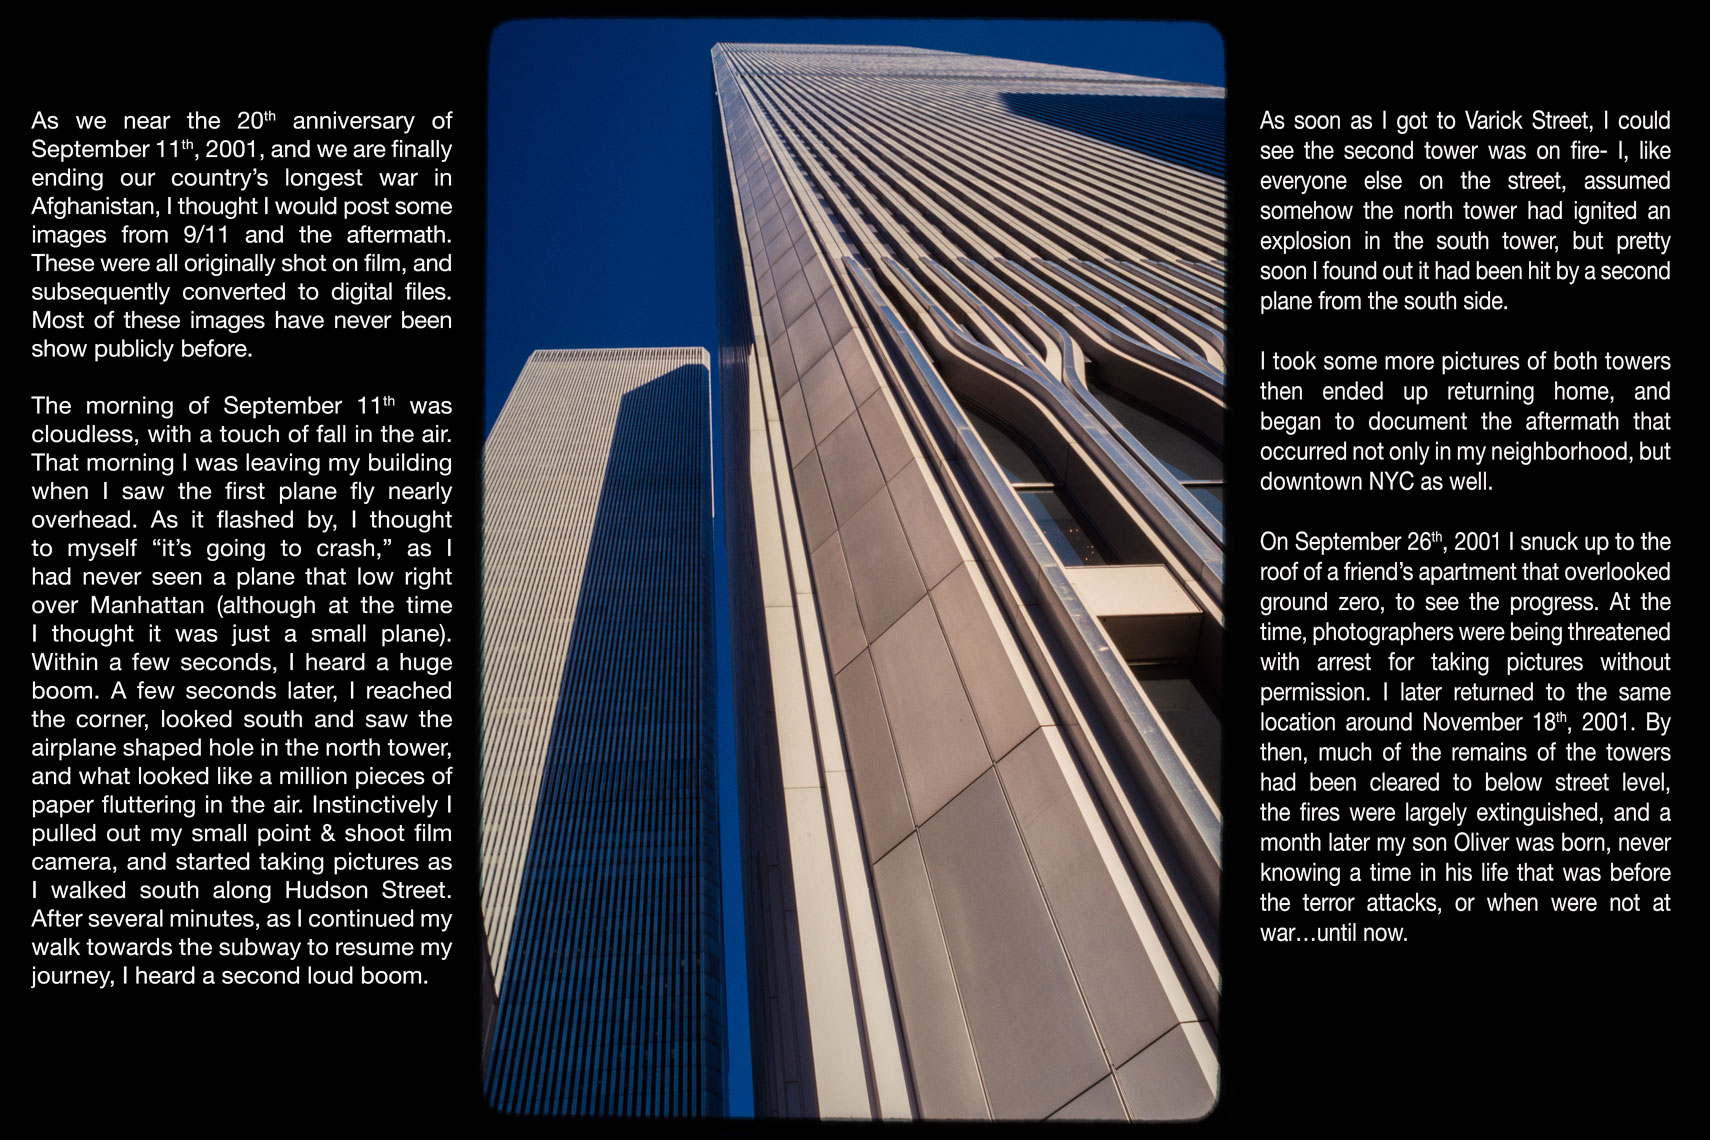 ripps_WTC_up_2_1989-horizontal2